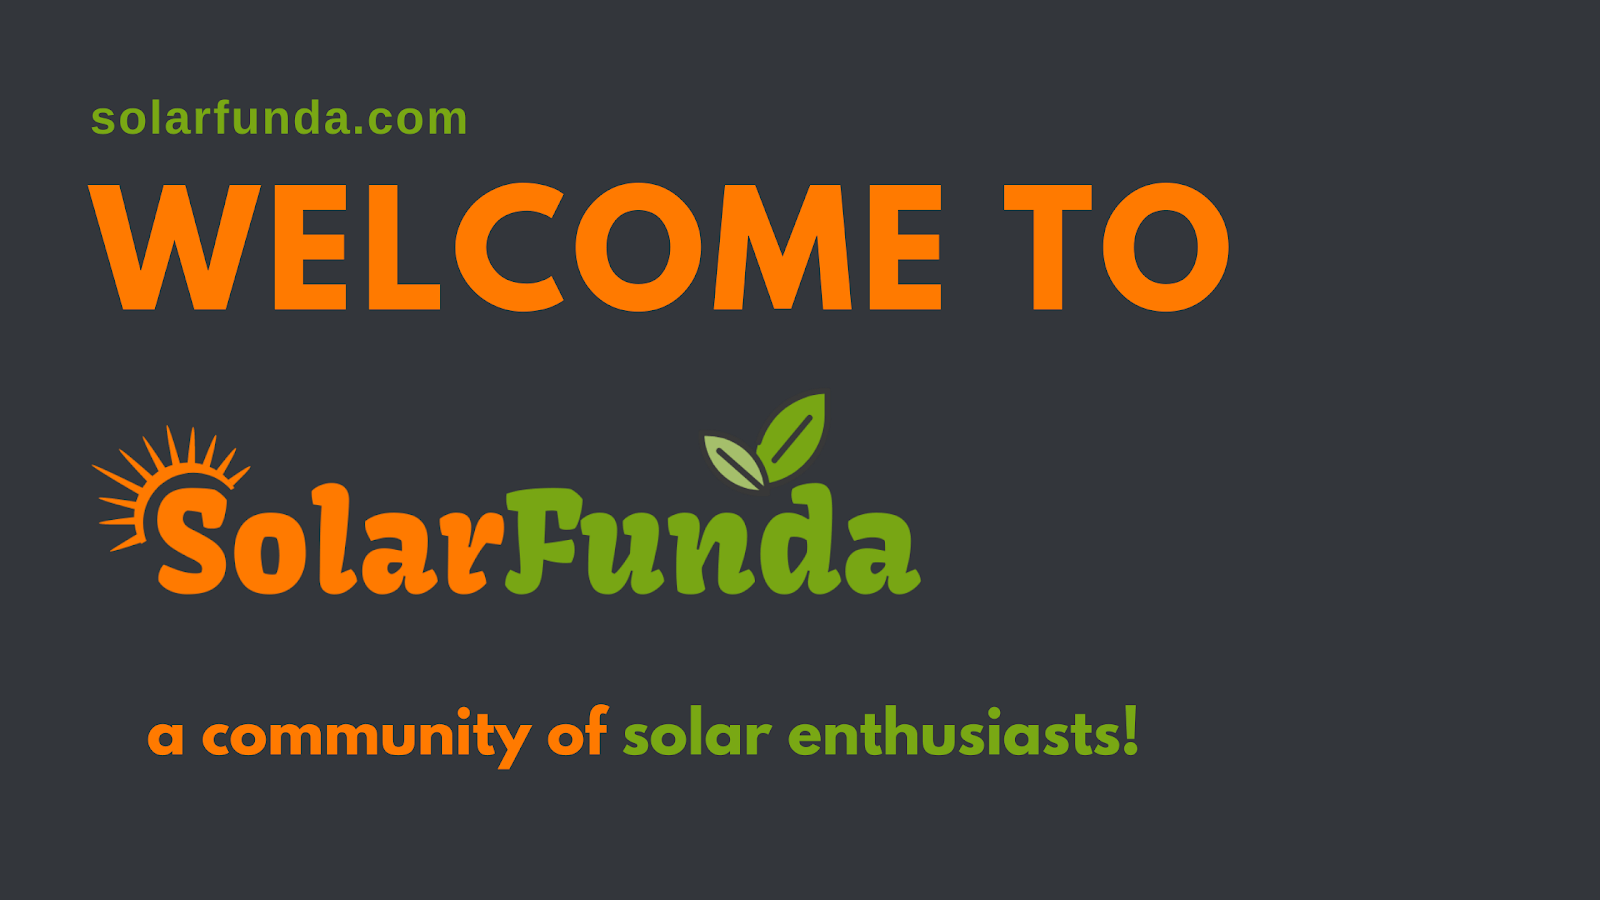 Welcome to Solar Funda